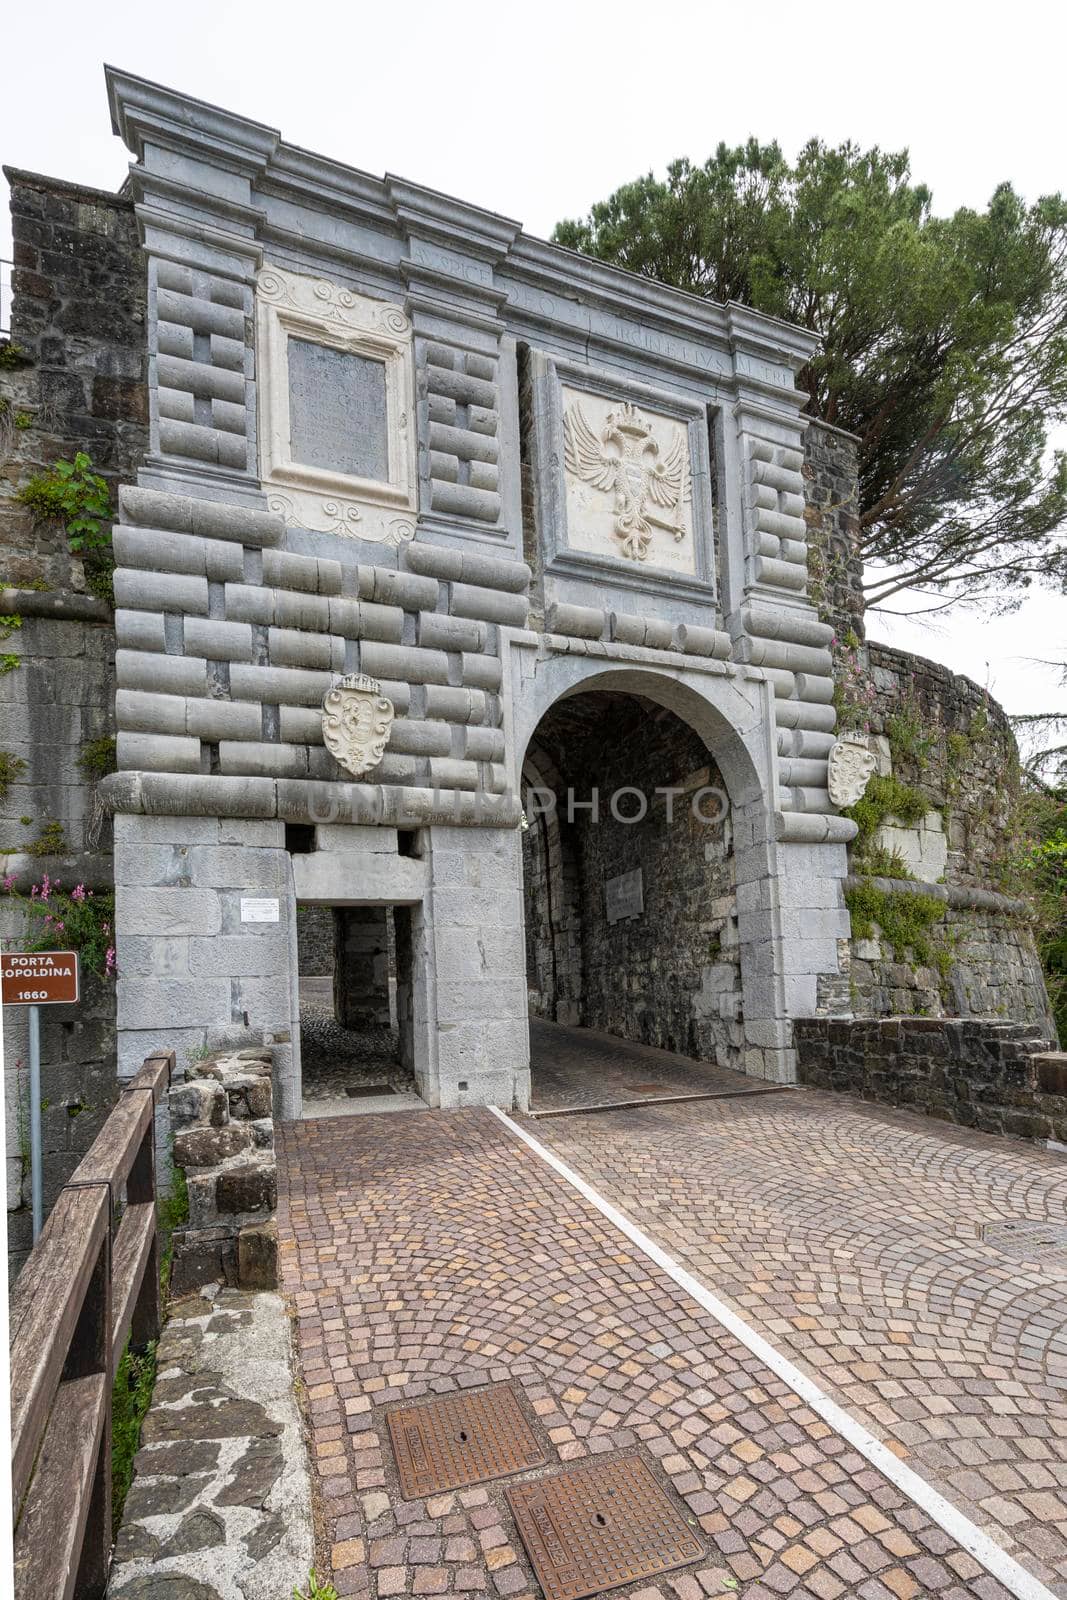 Leopoldina gate in Gorizia by sergiodv